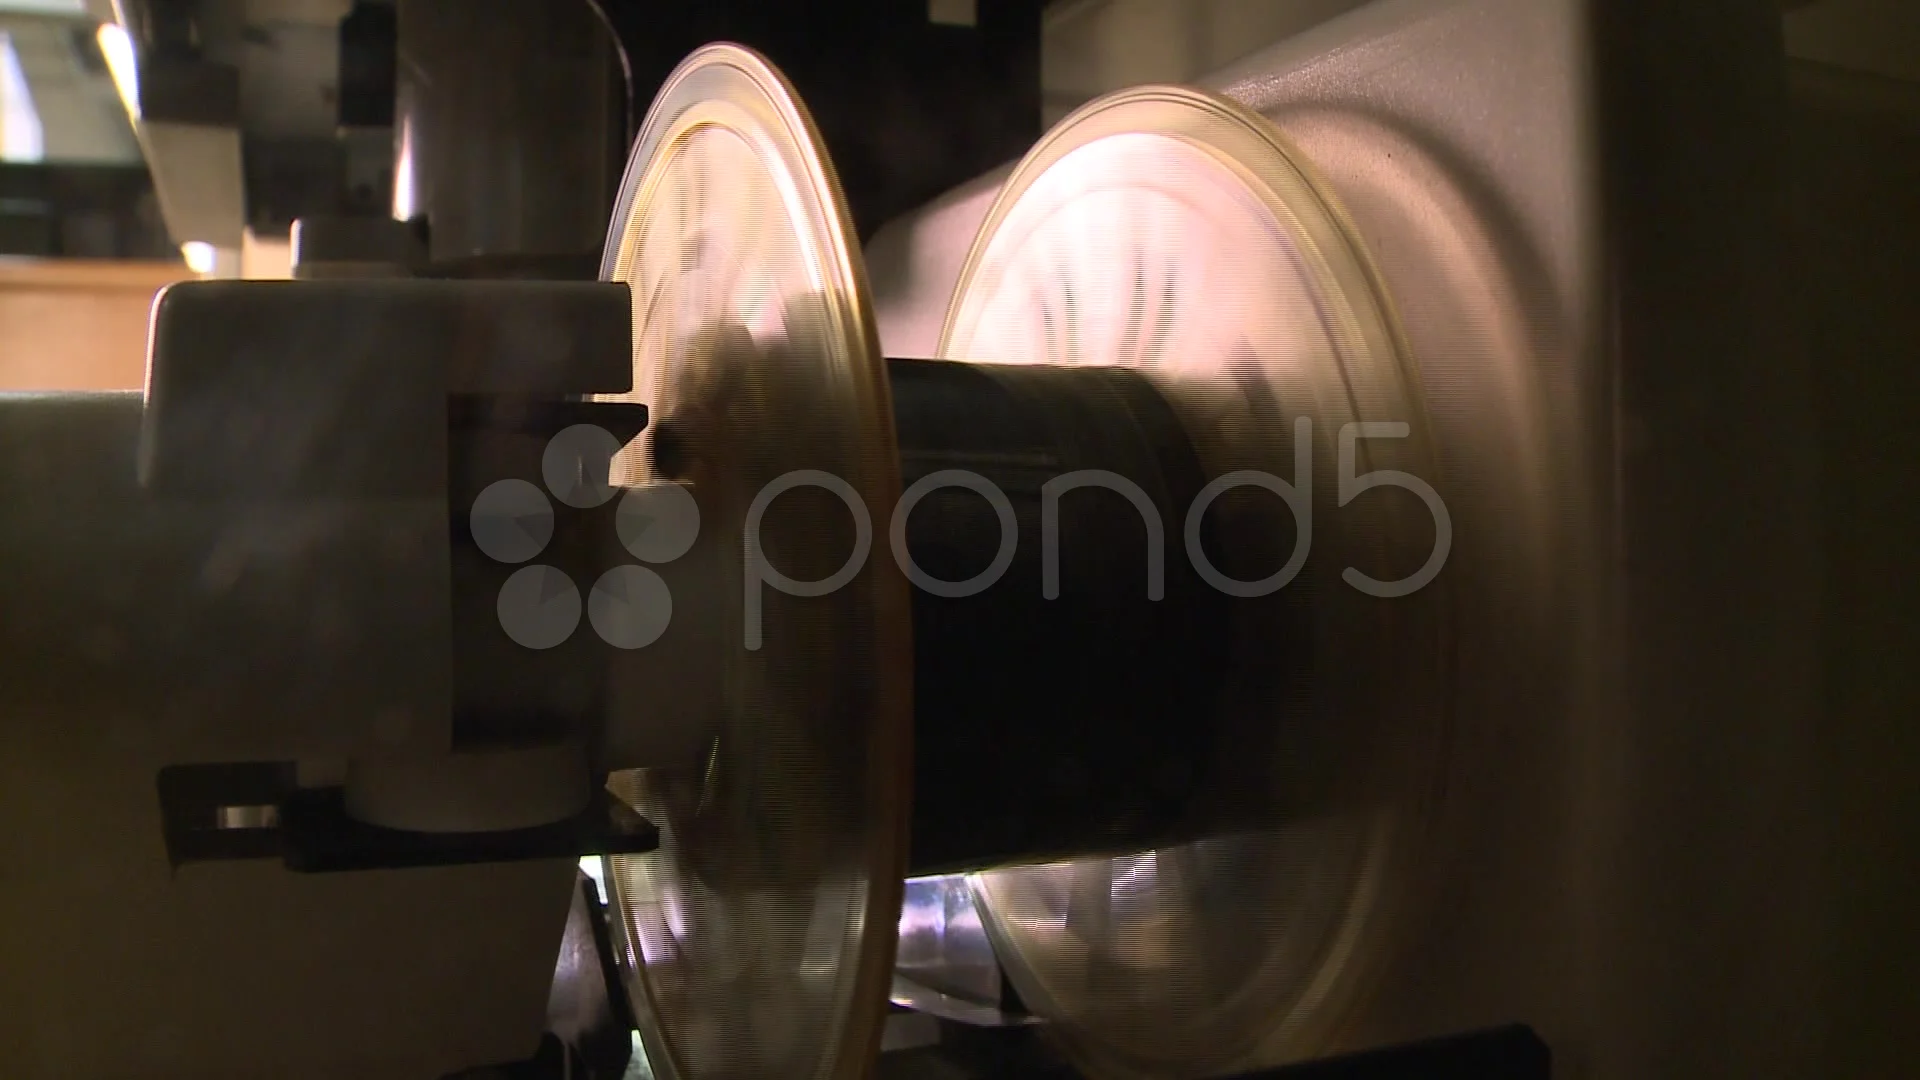 https://images.pond5.com/old-movie-projector-reel-microfiche-footage-032880113_prevstill.jpeg